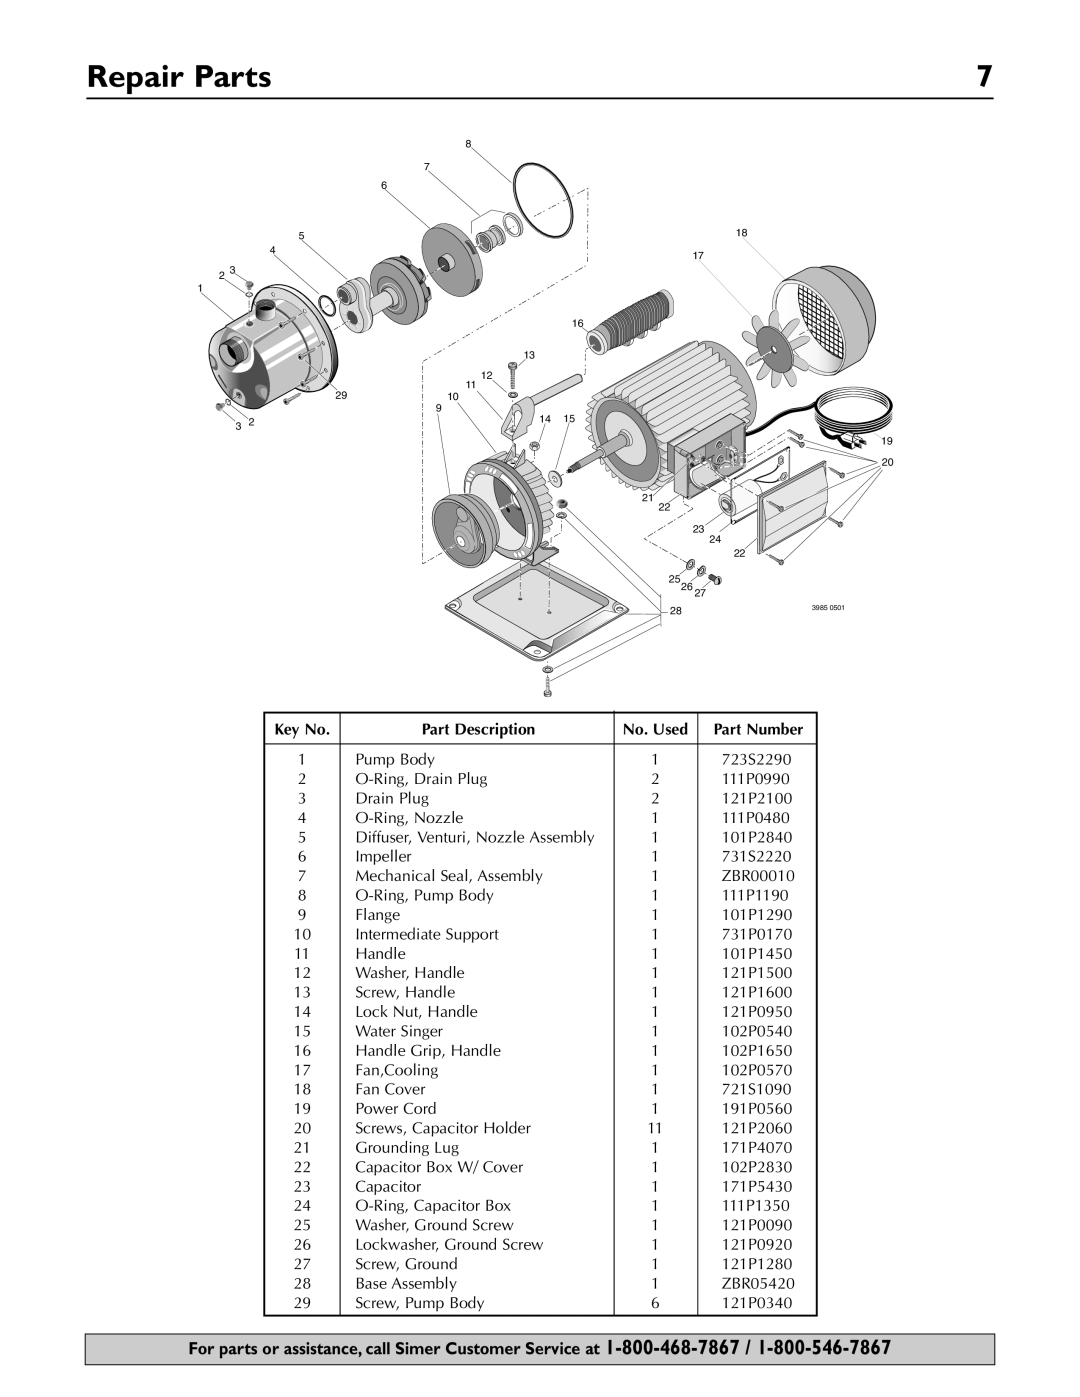 Simer Pumps 2825SS owner manual Repair Parts, Part Description, No. Used, Part Number 